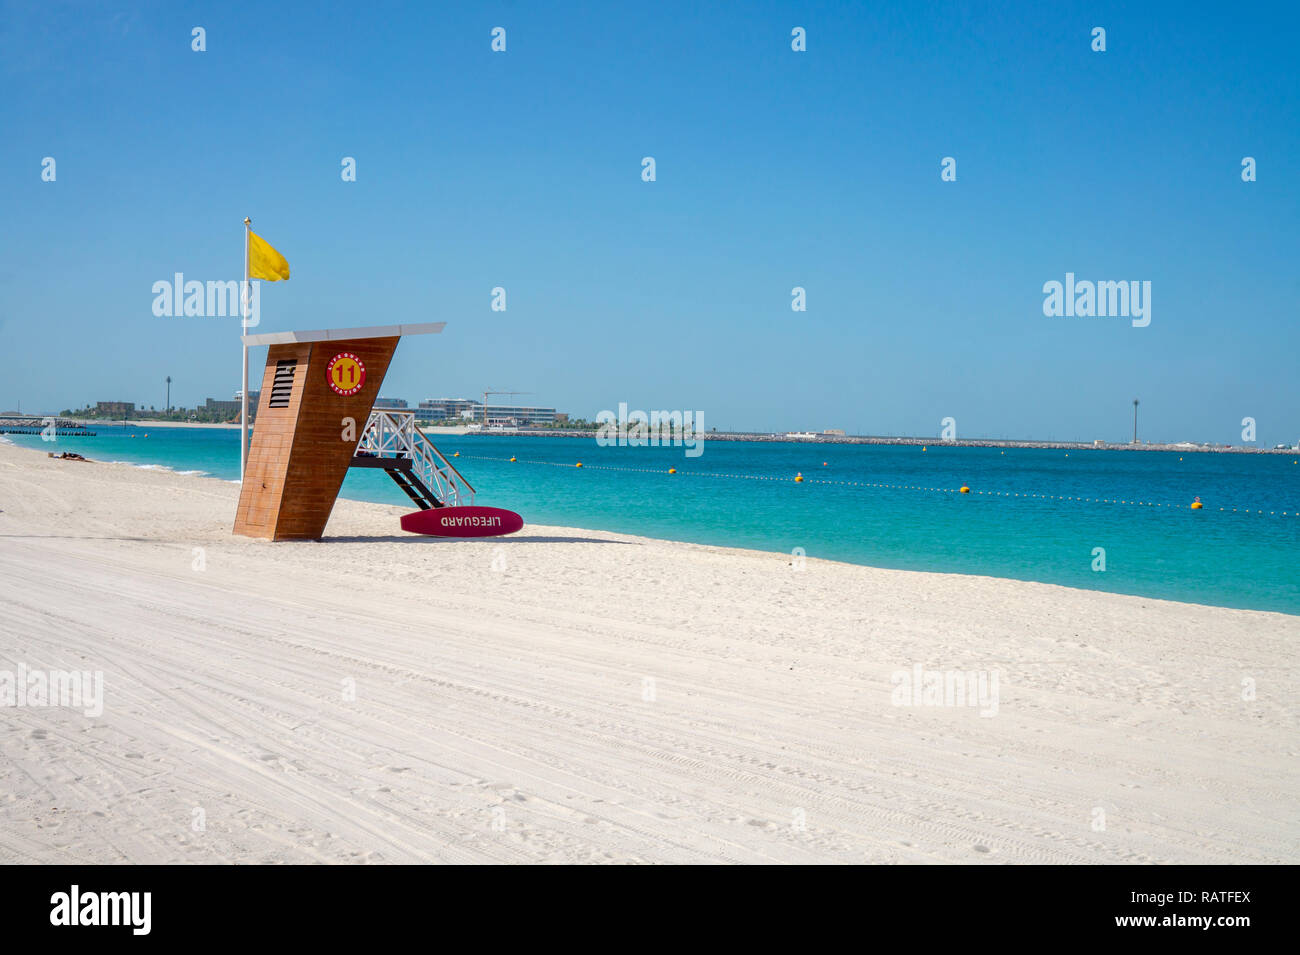 Emergency services hut on a sunny Jumeirah beach, in Dubai with blue sea Stock Photo